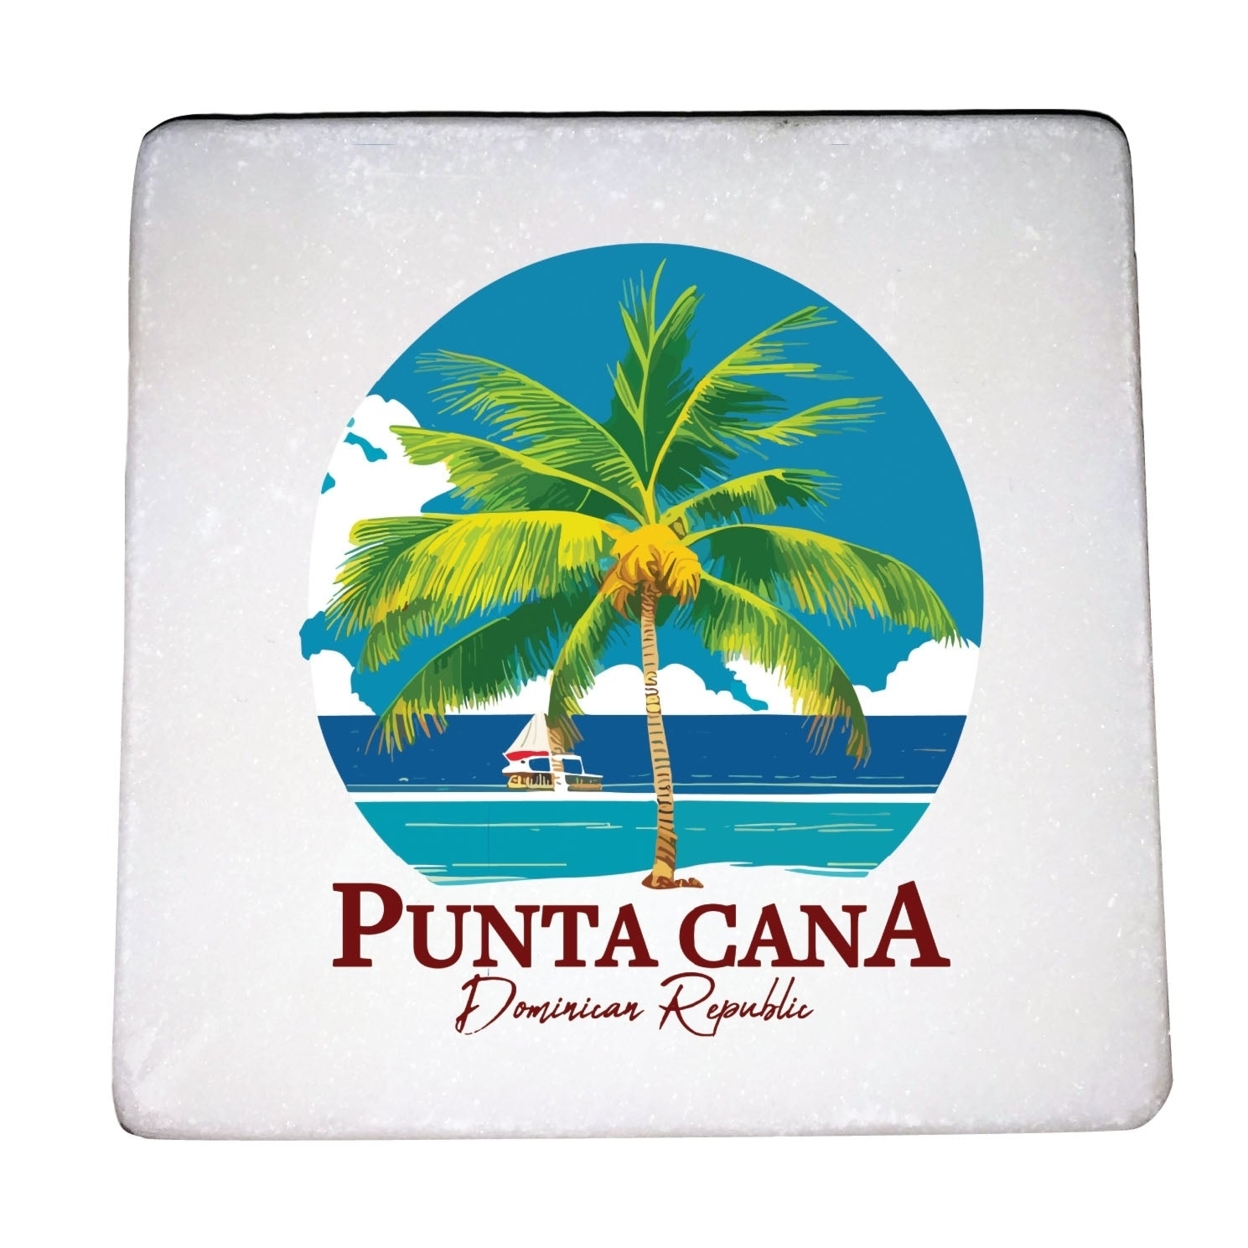 Punta Cana Dominican Republic Souvenir 4x4-Inch Coaster Marble